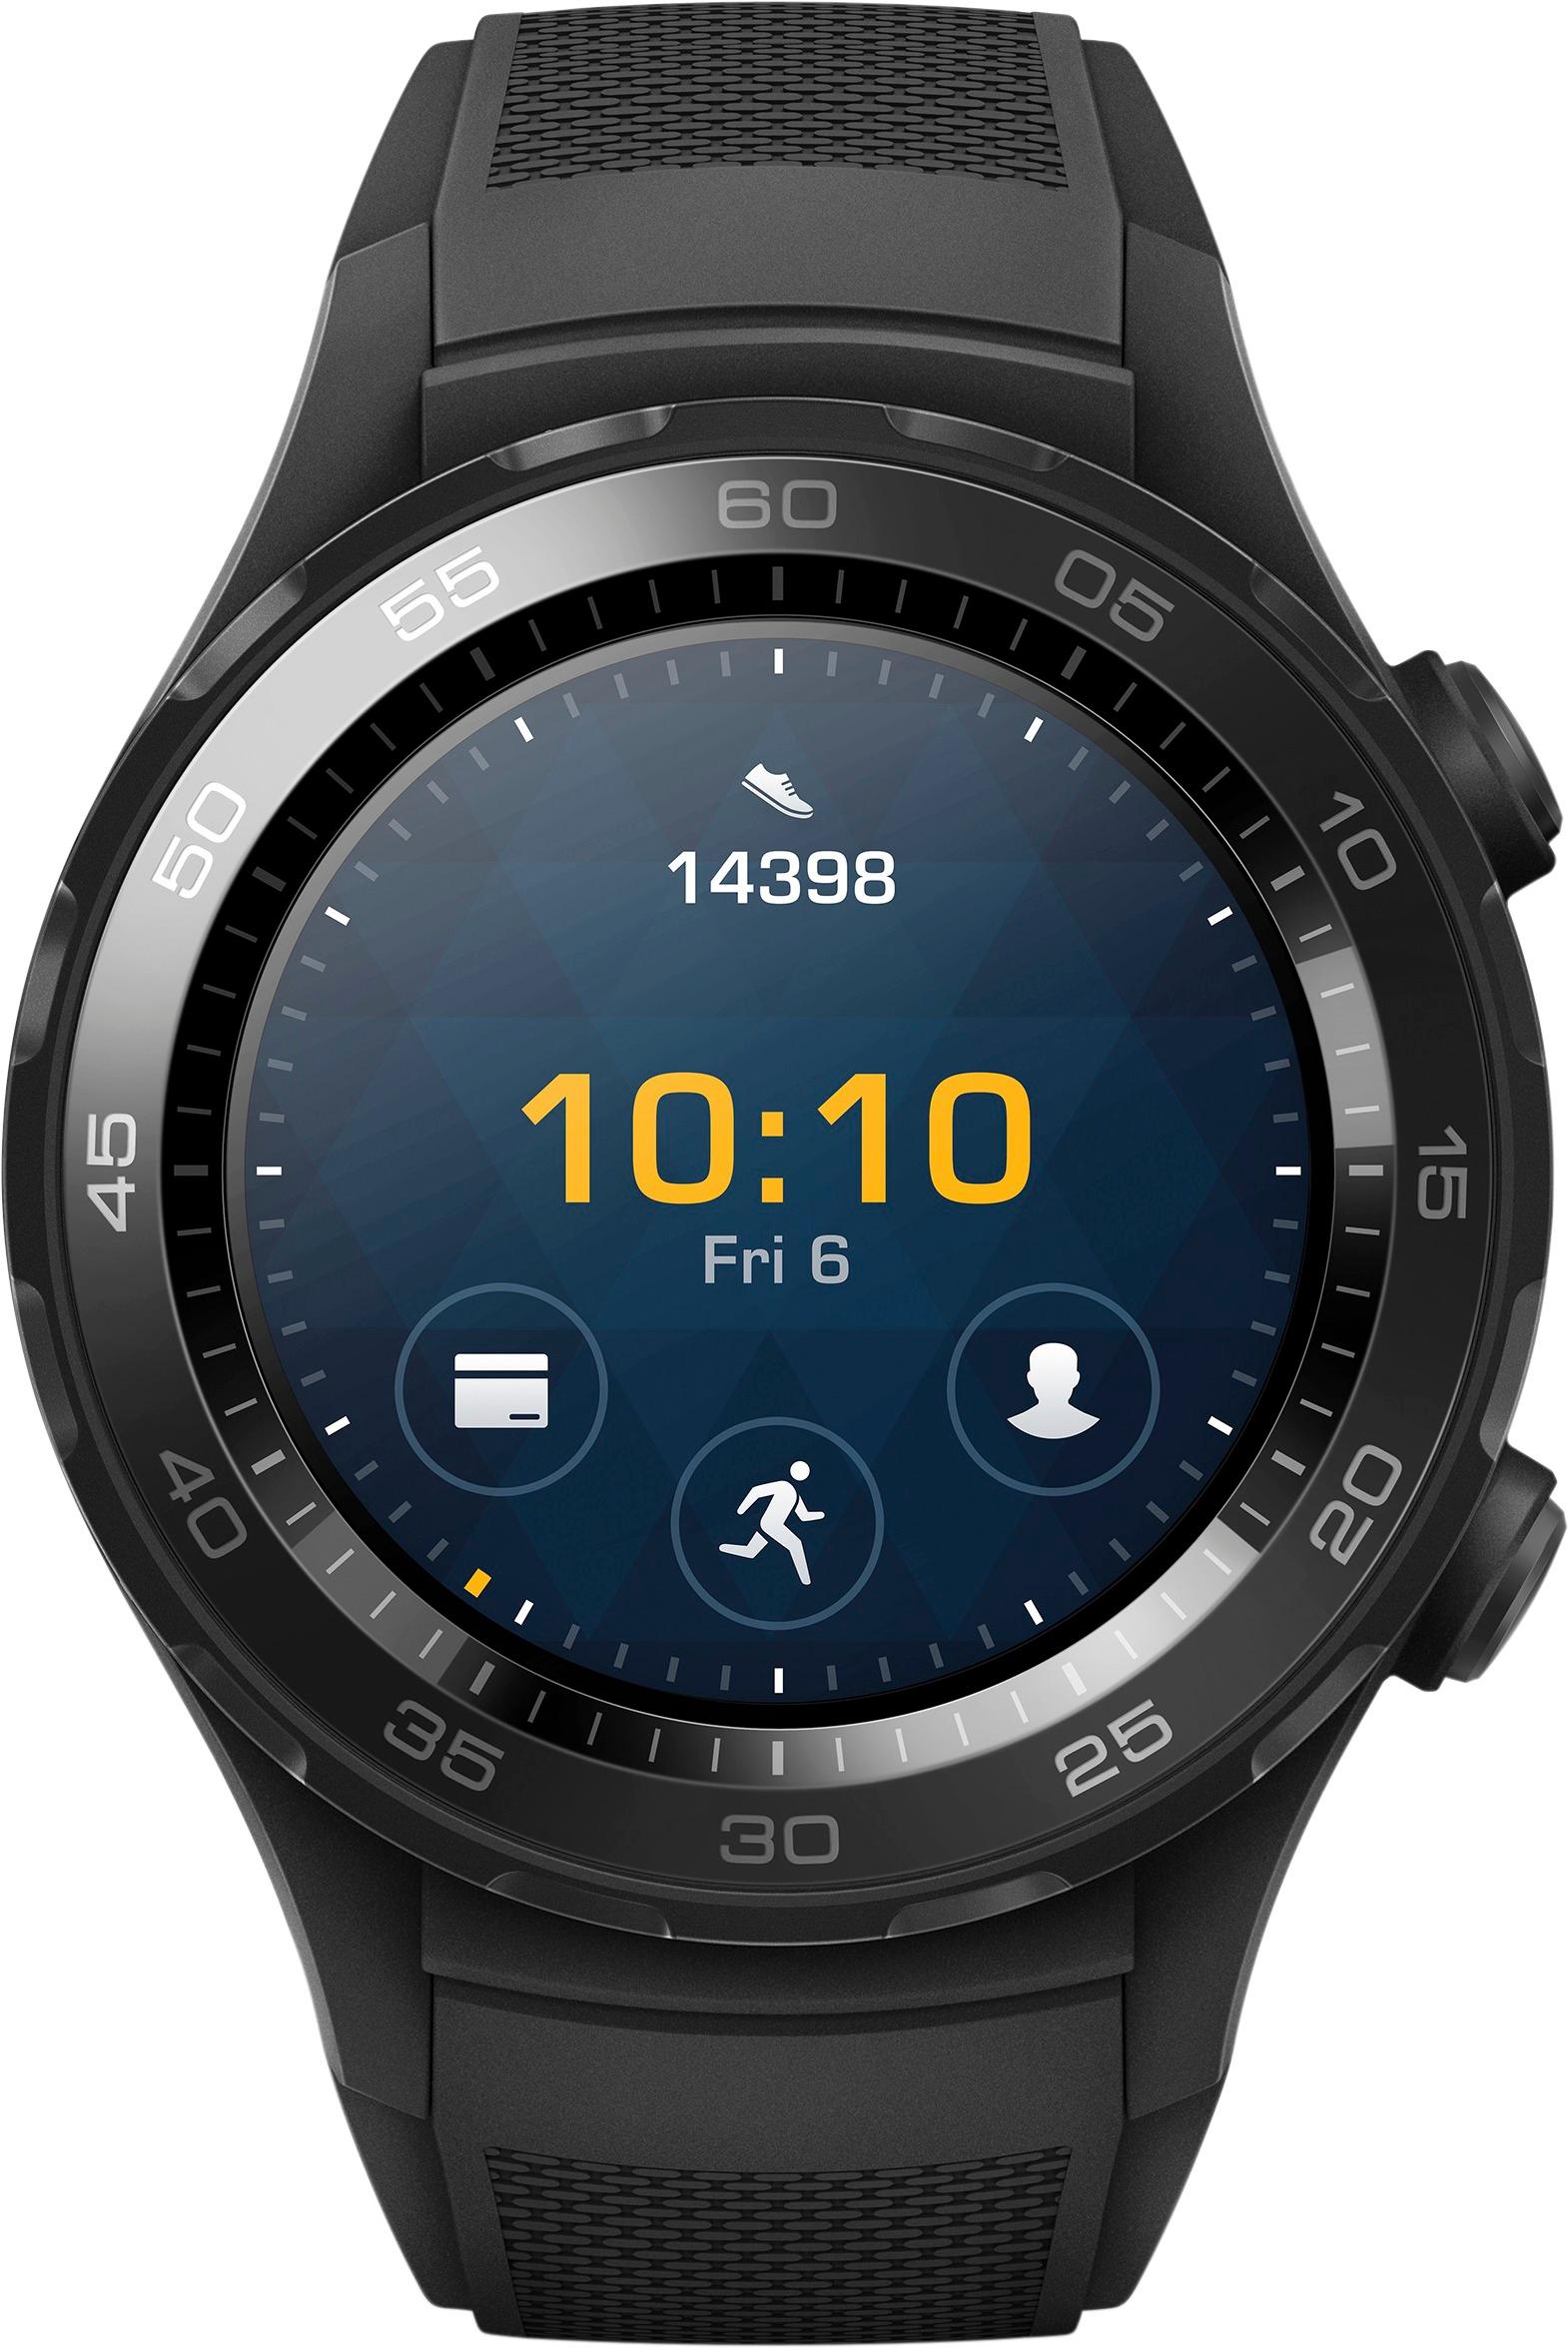 Abnormaal Peregrination ademen Best Buy: Huawei Watch 2 Sports Smartwatch 45mm Plastic Carbon Black LEO-B09